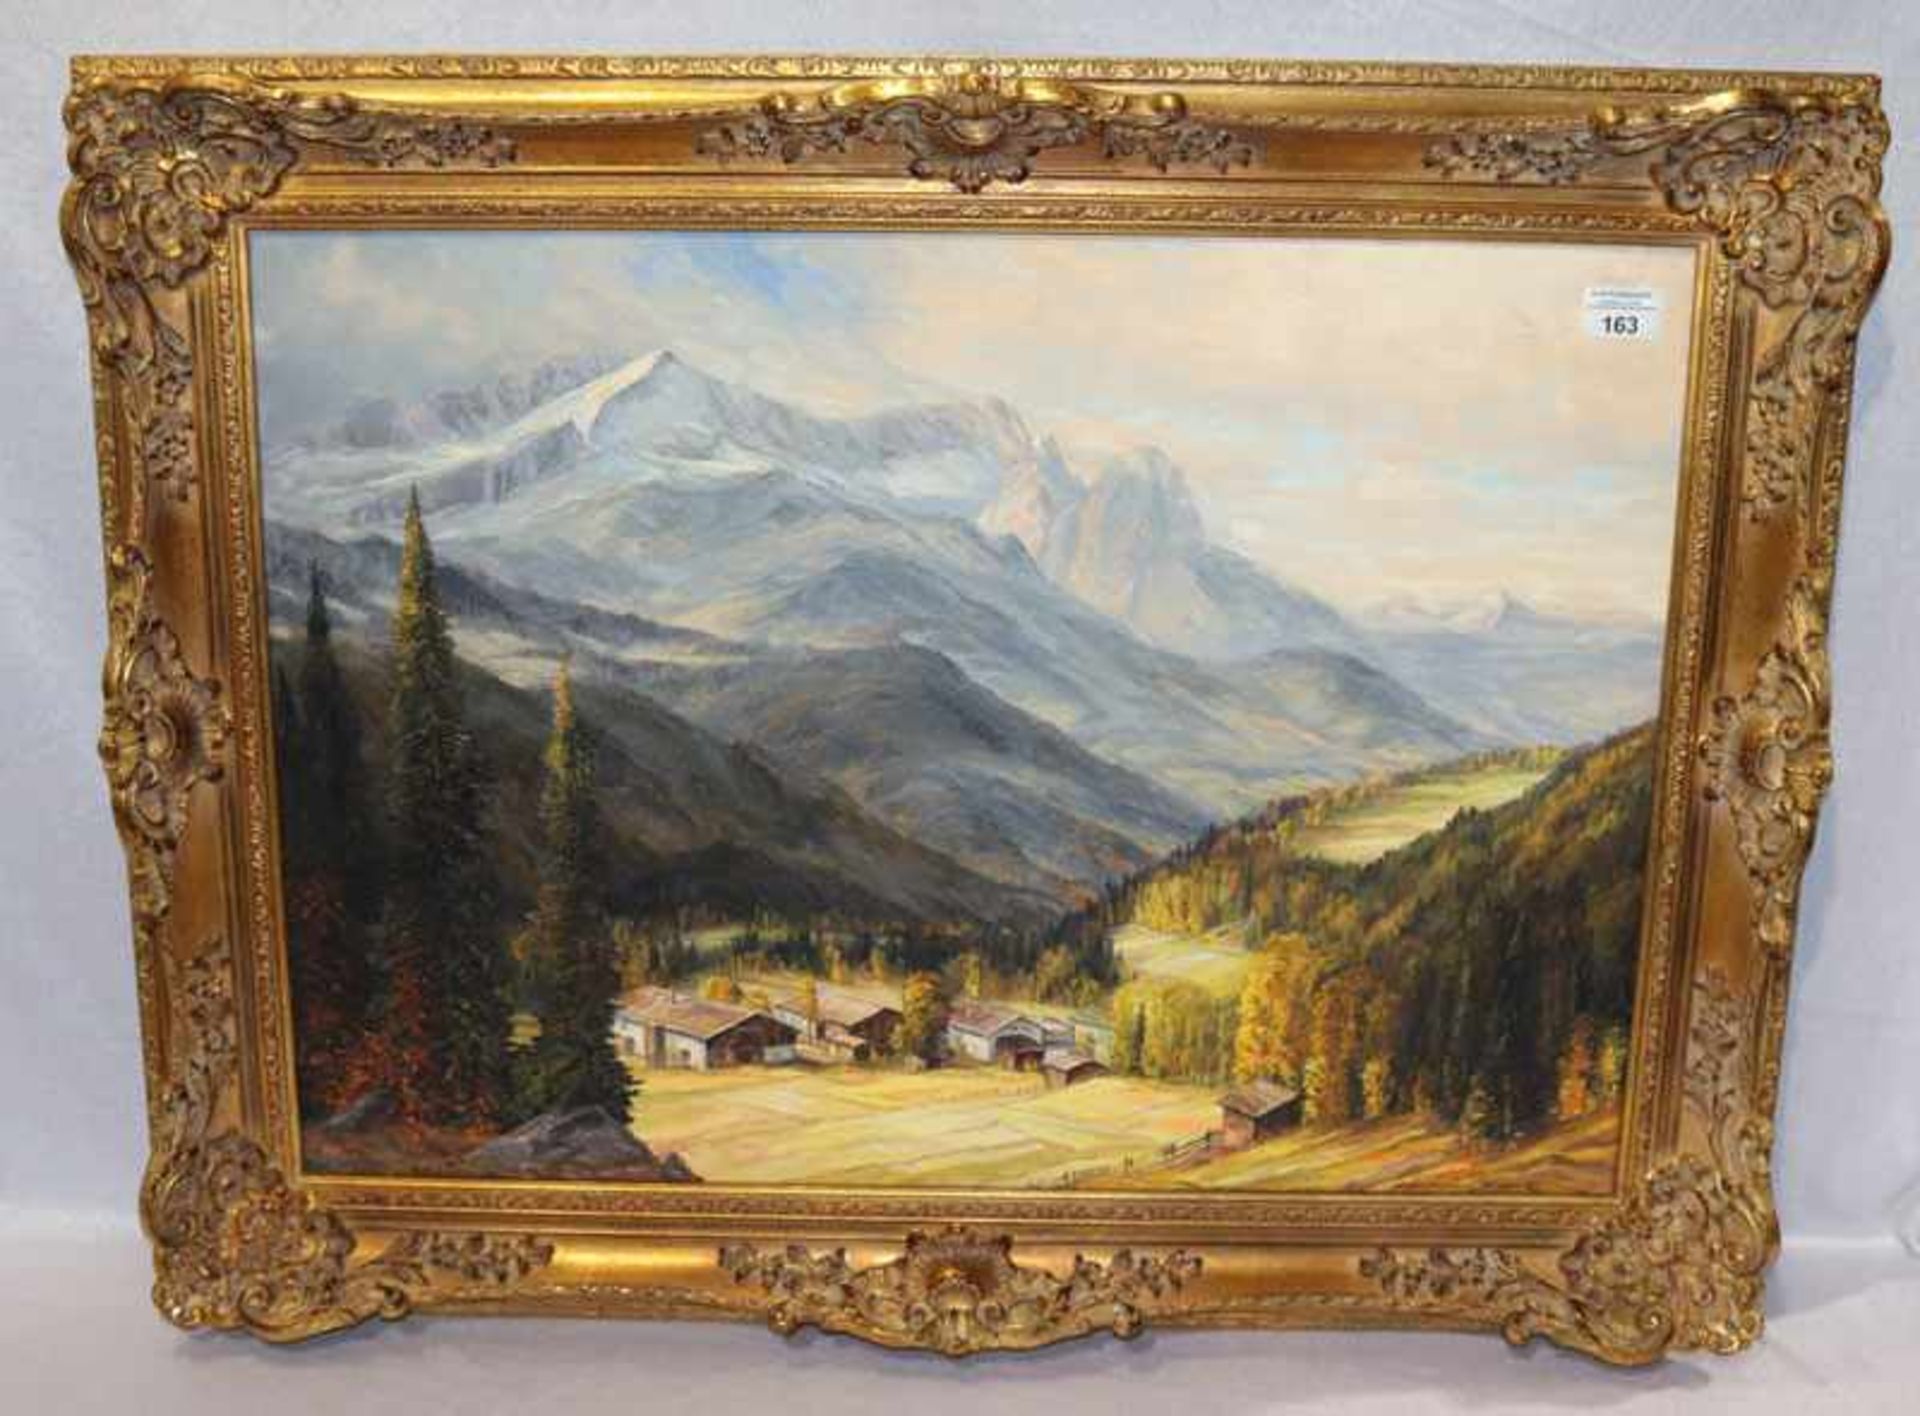 Gemälde ÖL/LW 'Blick aufs Wettersteingebirge', signiert Heinz, datiert 81, dekorativ gerahmt,